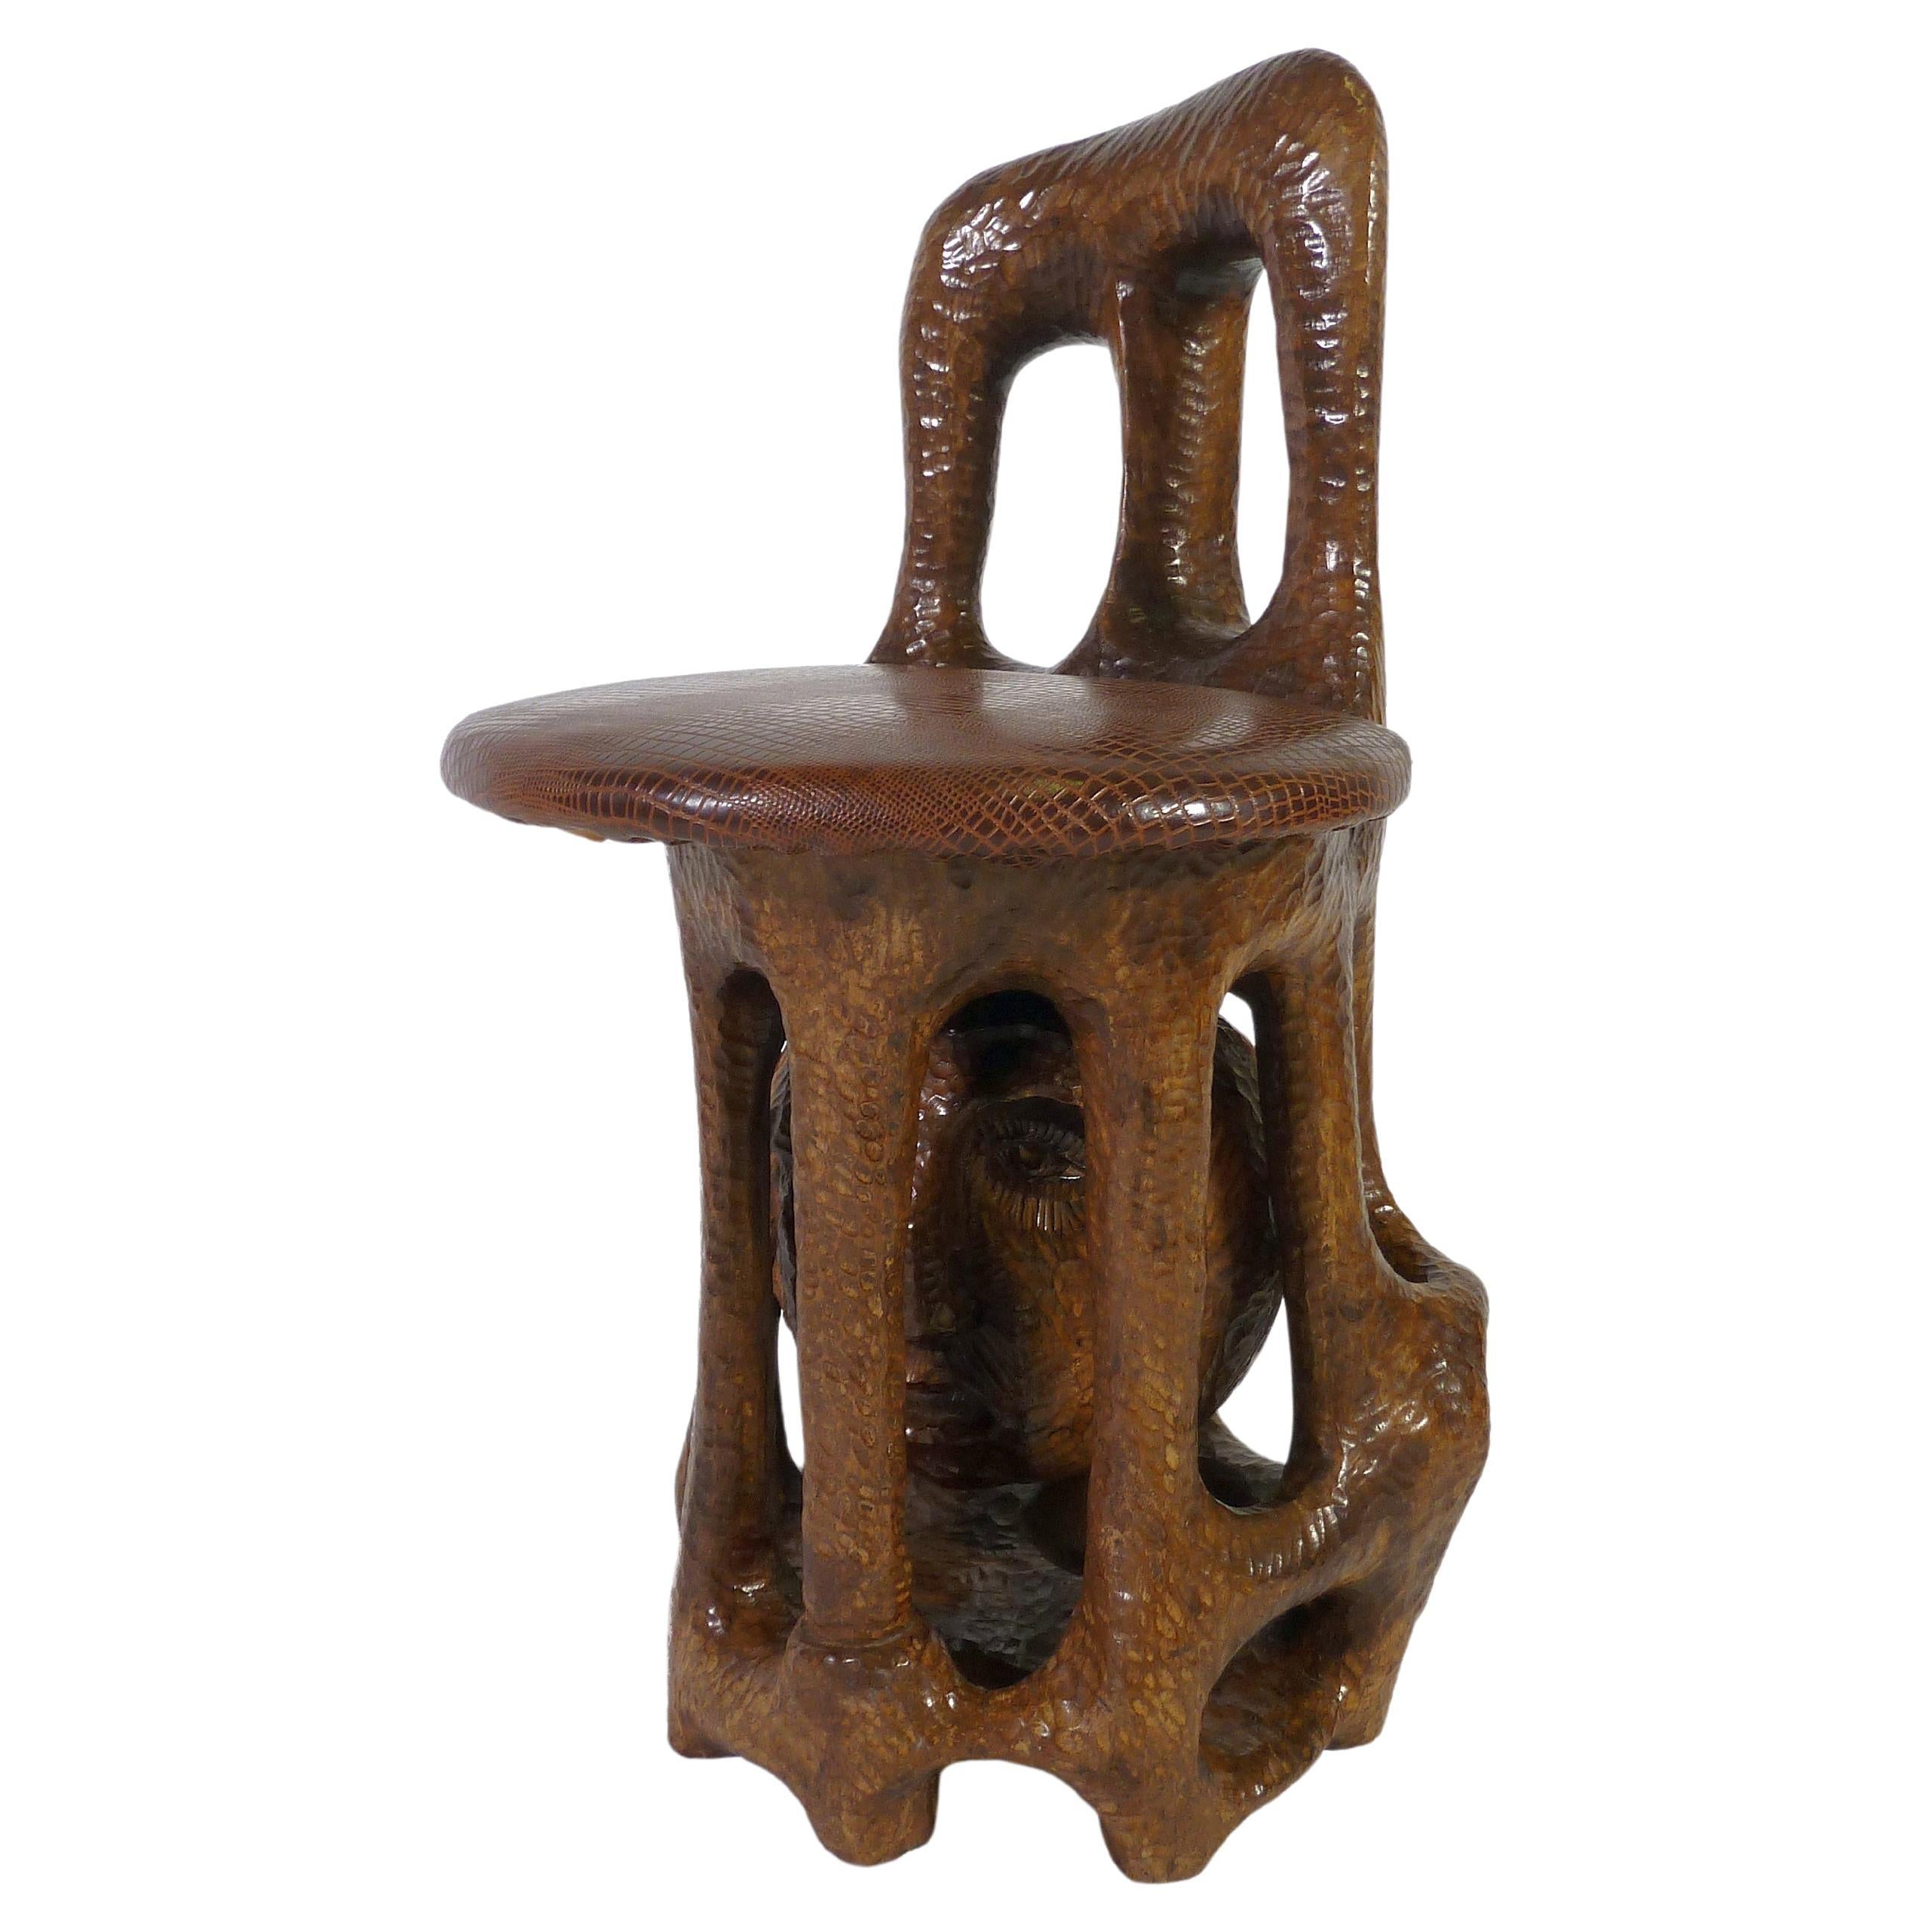 Sol Garson Signierter skulpturaler Stuhl, 1970er Jahre, Kunst, handgeschnitzte Holzskulptur Mandela